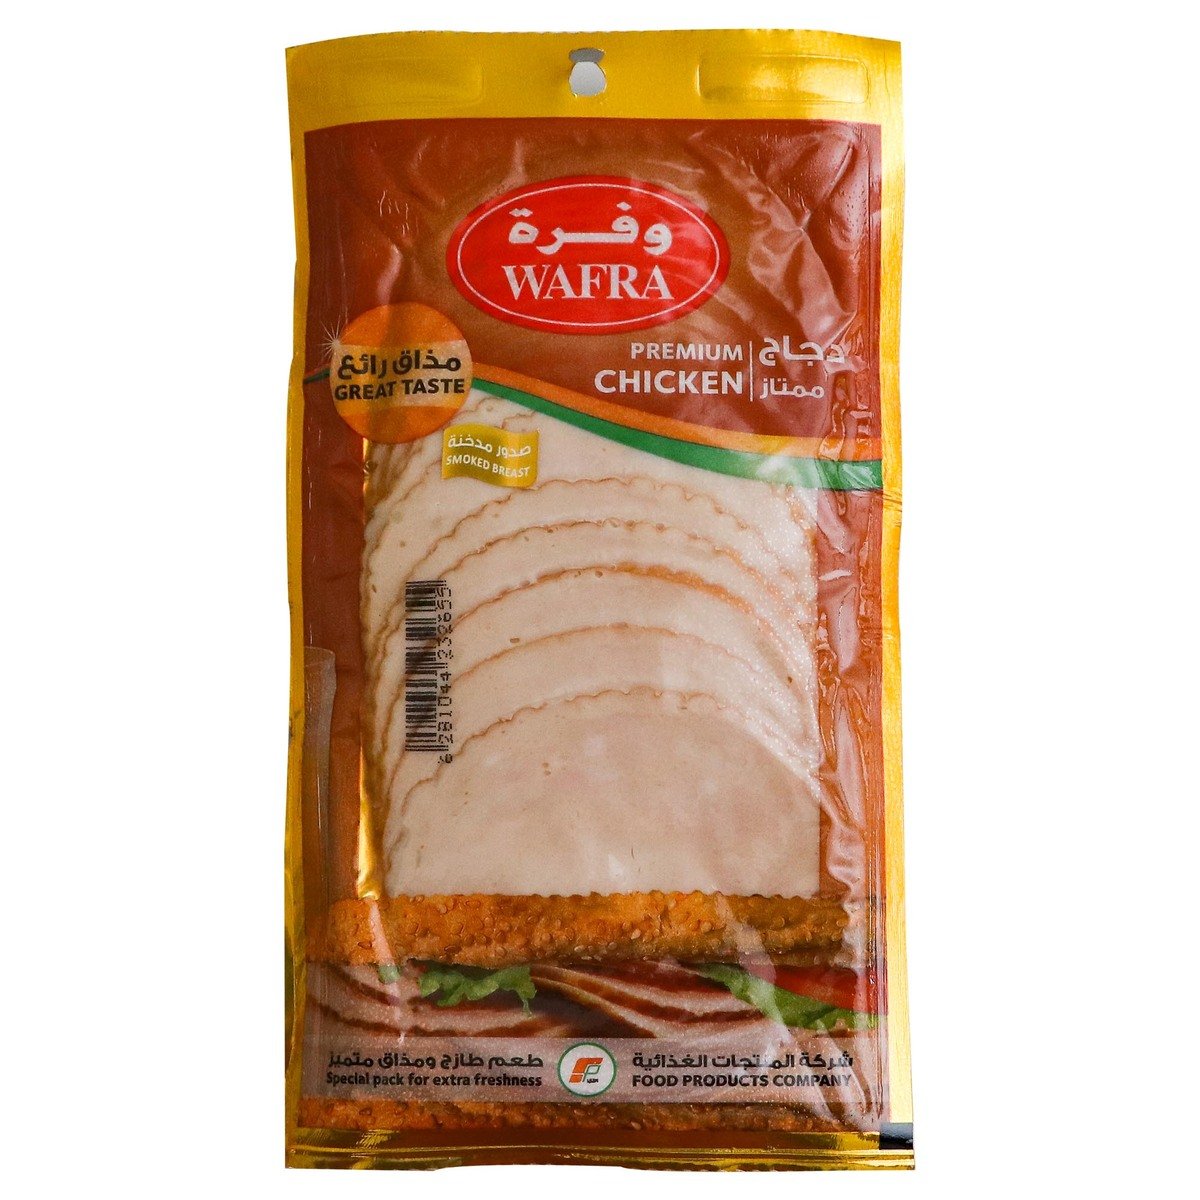 Wafra Premium Chicken Smoked Breast 200g